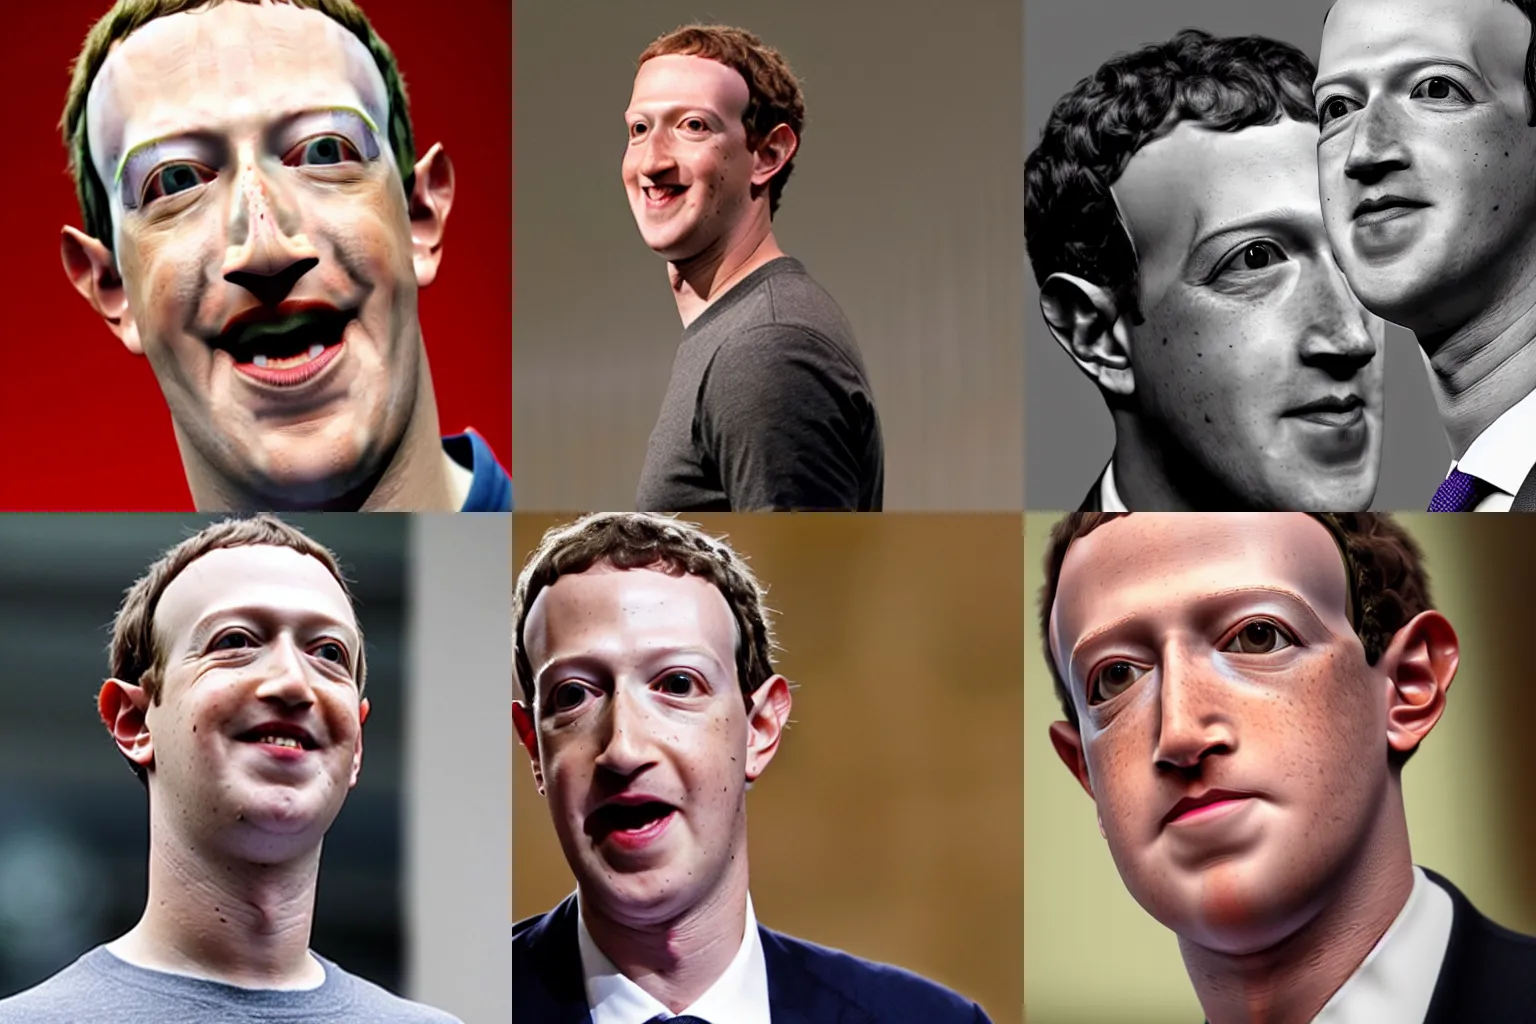 Prompt: Scary creepy horrific Mark Zuckerberg villain